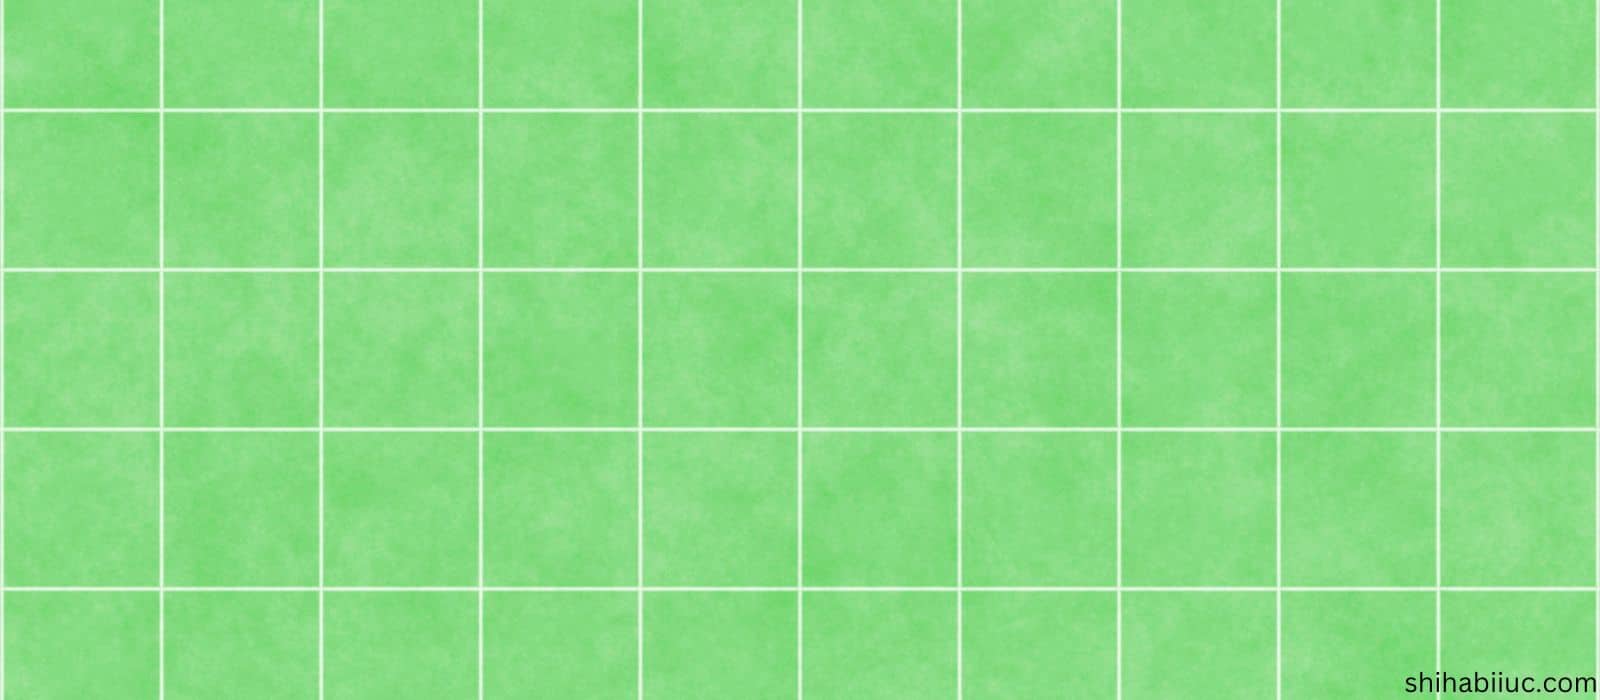 Grid, square, rectangle